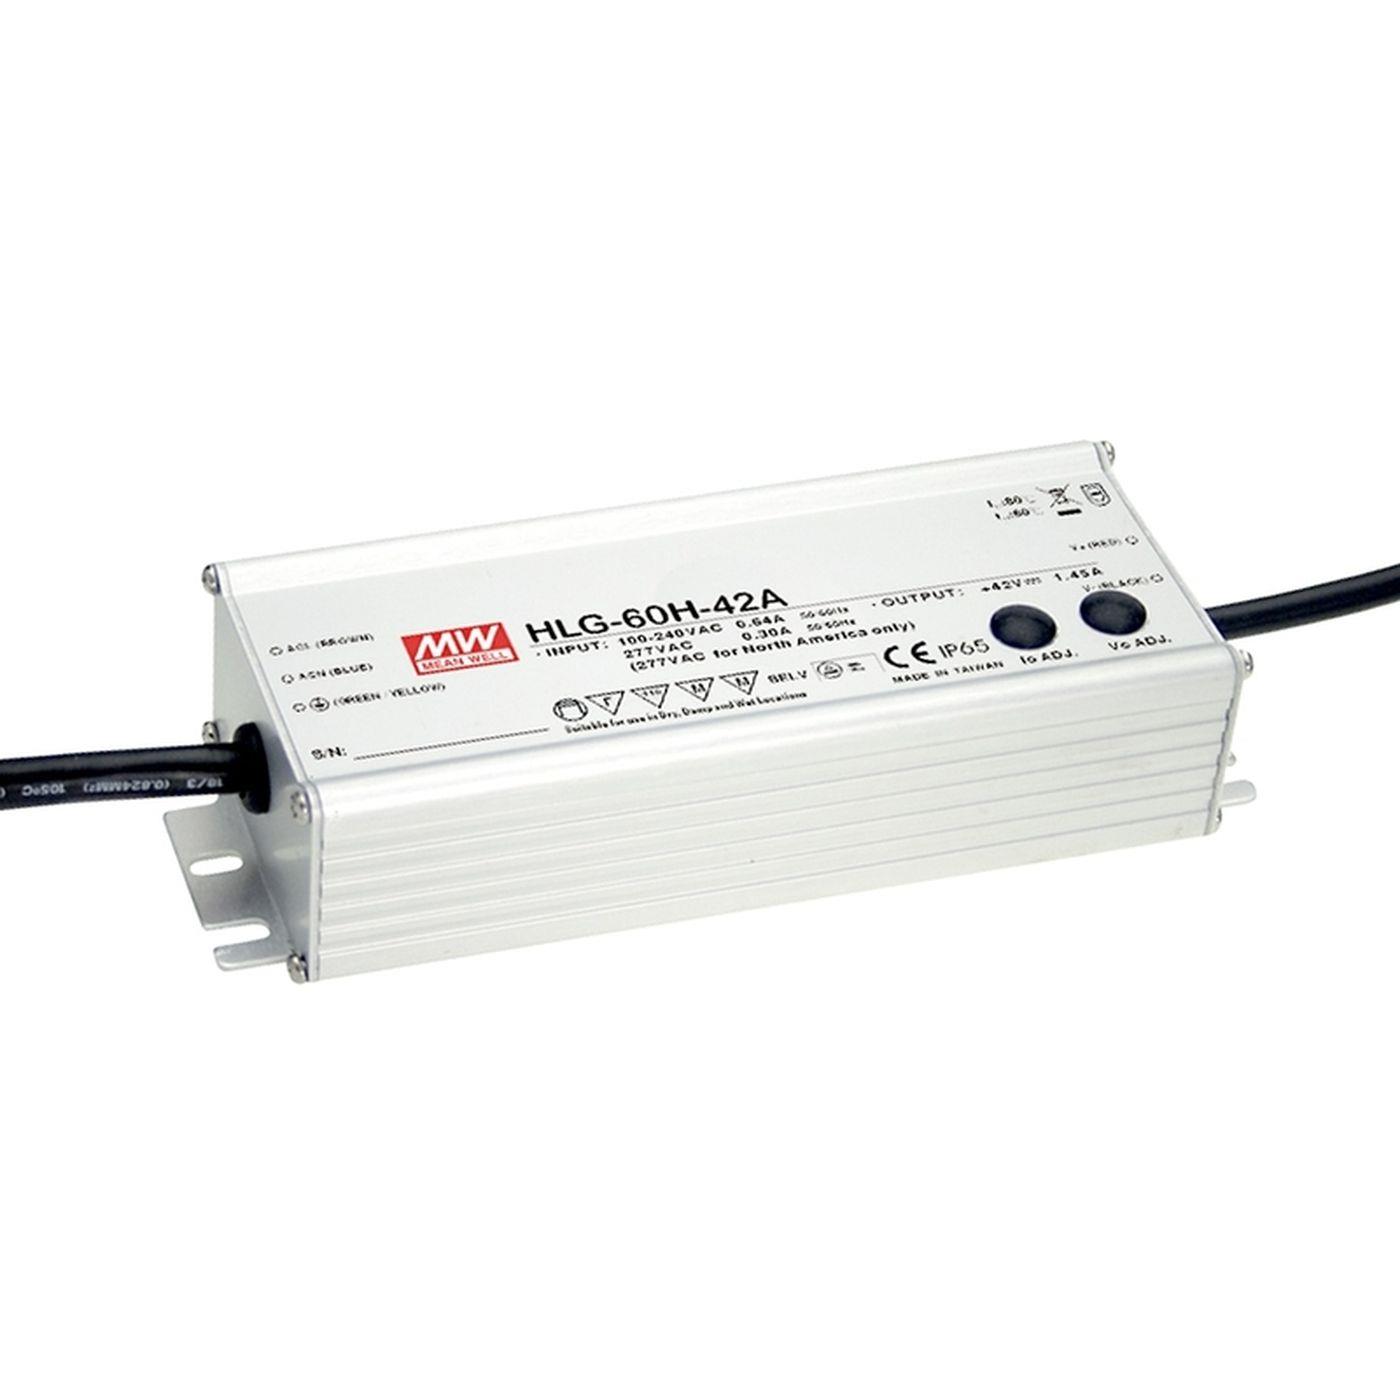 HLG-60H-24B 60W 24V 2,5A LED power supply Transformer Driver IP67 Dimmable 0-10V PWM